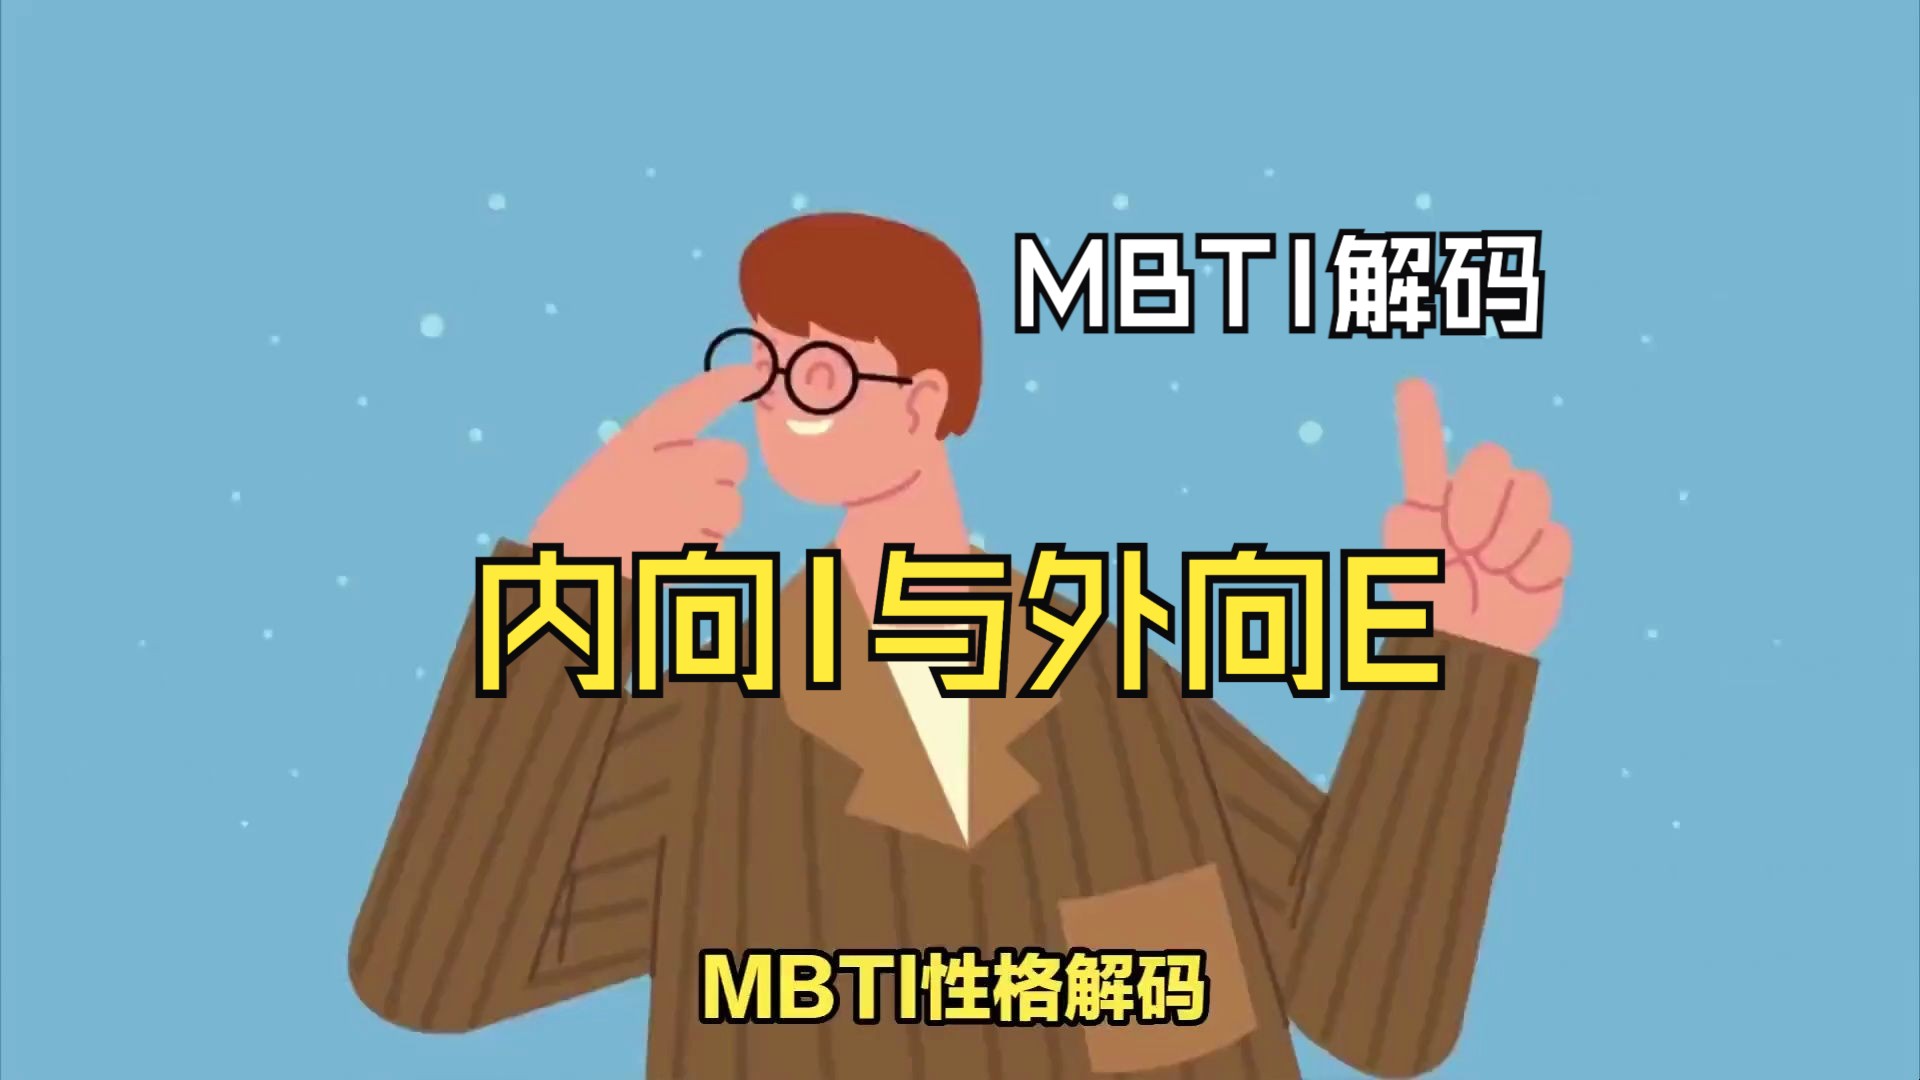 MBTI 性格デコード: 内向性 I と外向性 E